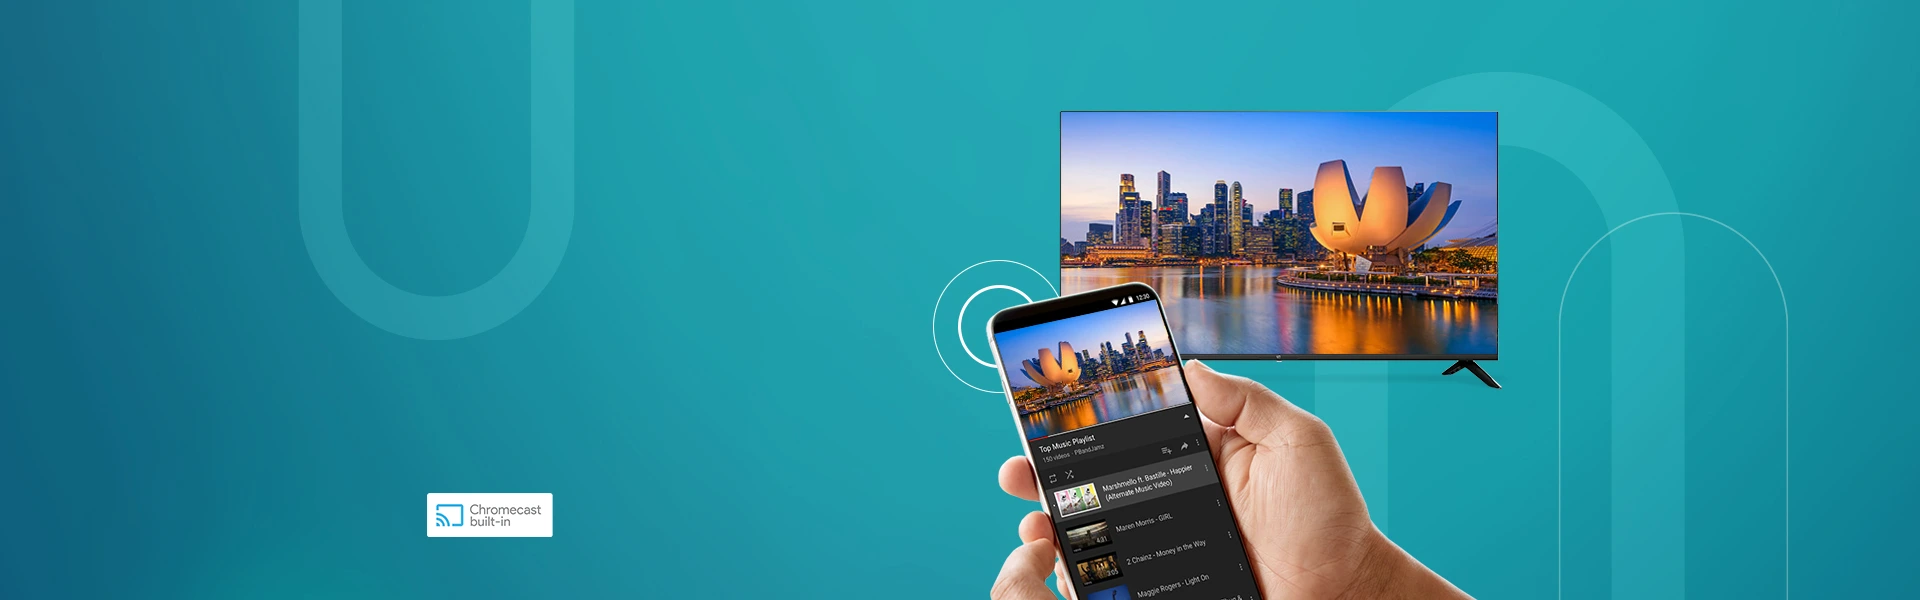 4K Ultra HD Android Smart TV UD 50U6210